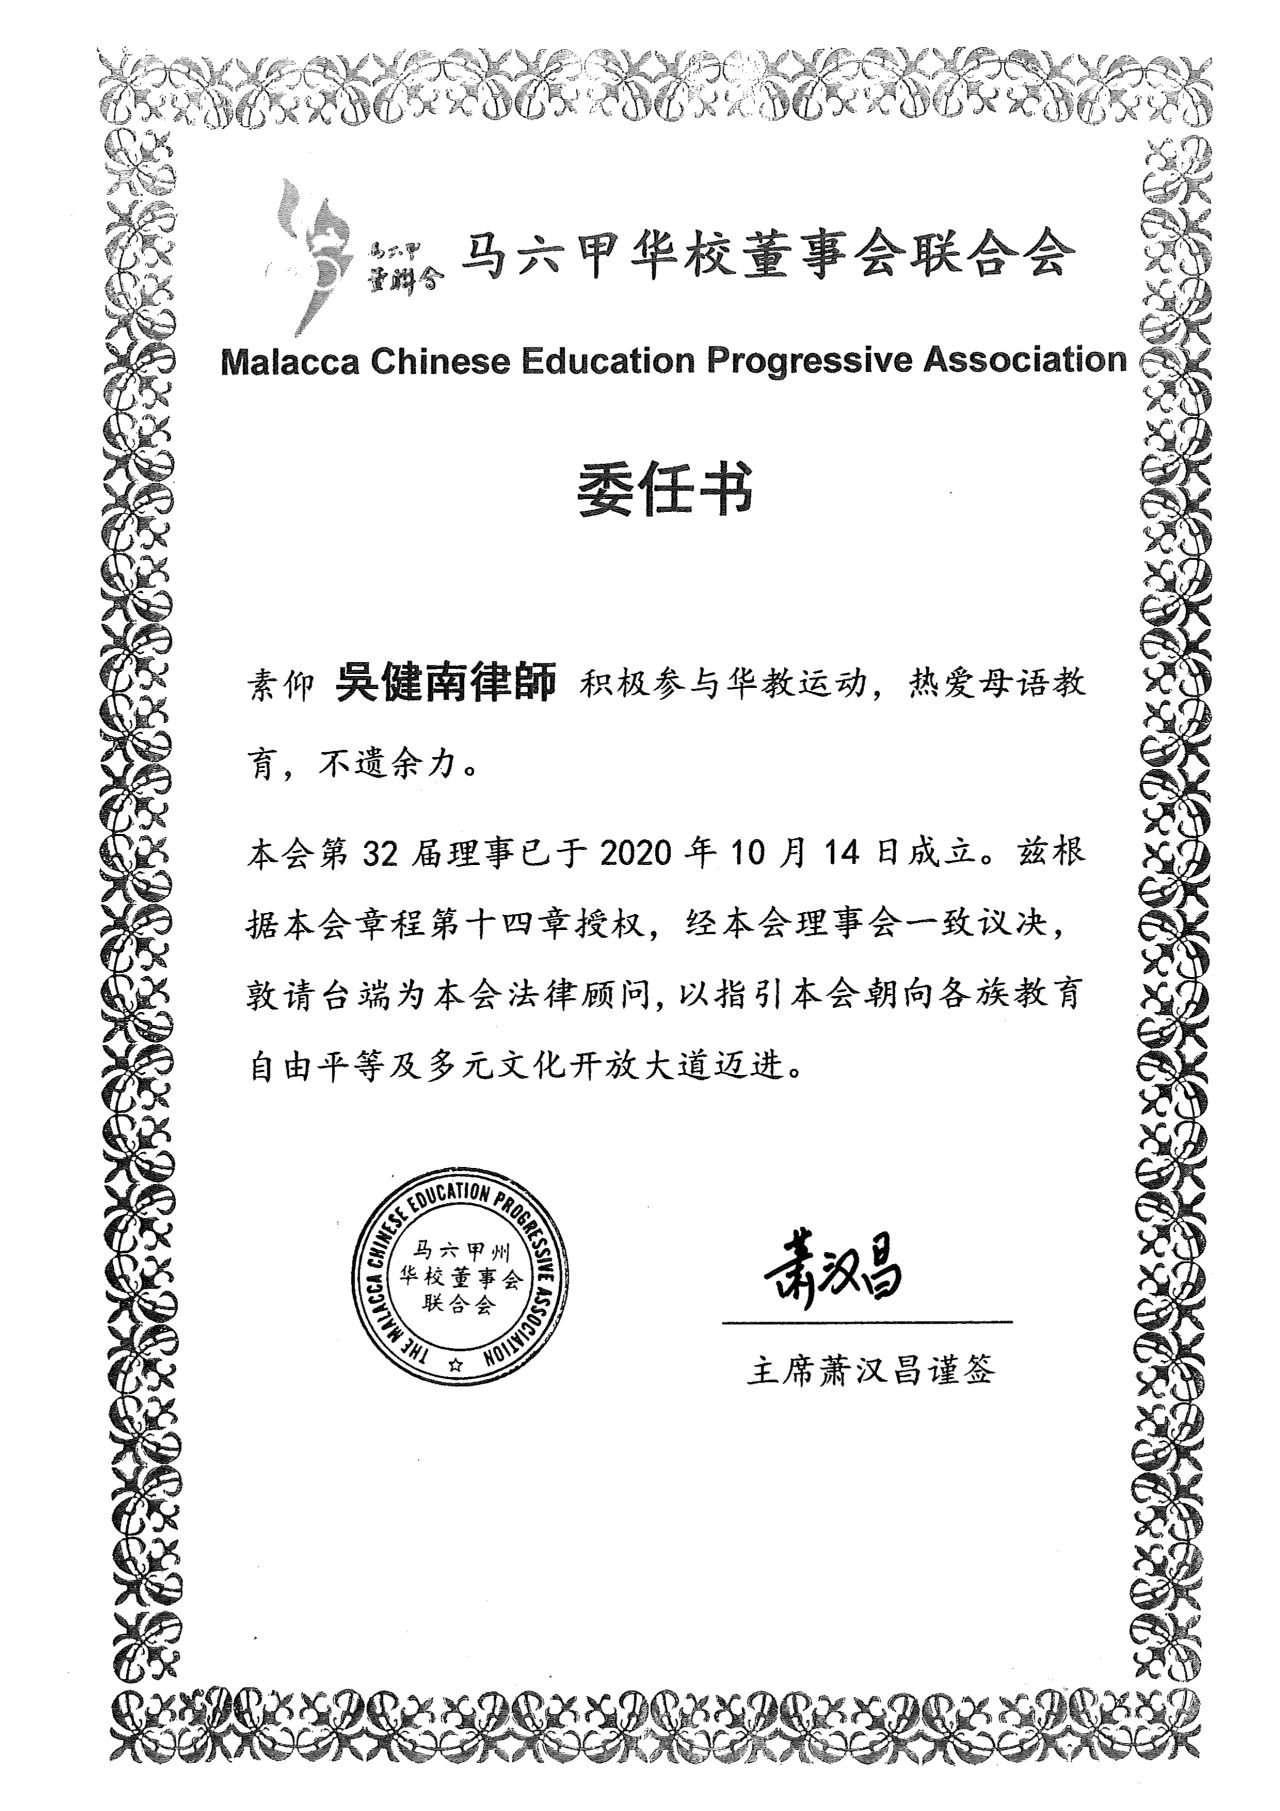 11. MALACCA CHINESE EDUCATION PROGRESSIVE ASSOCIATION (2020)